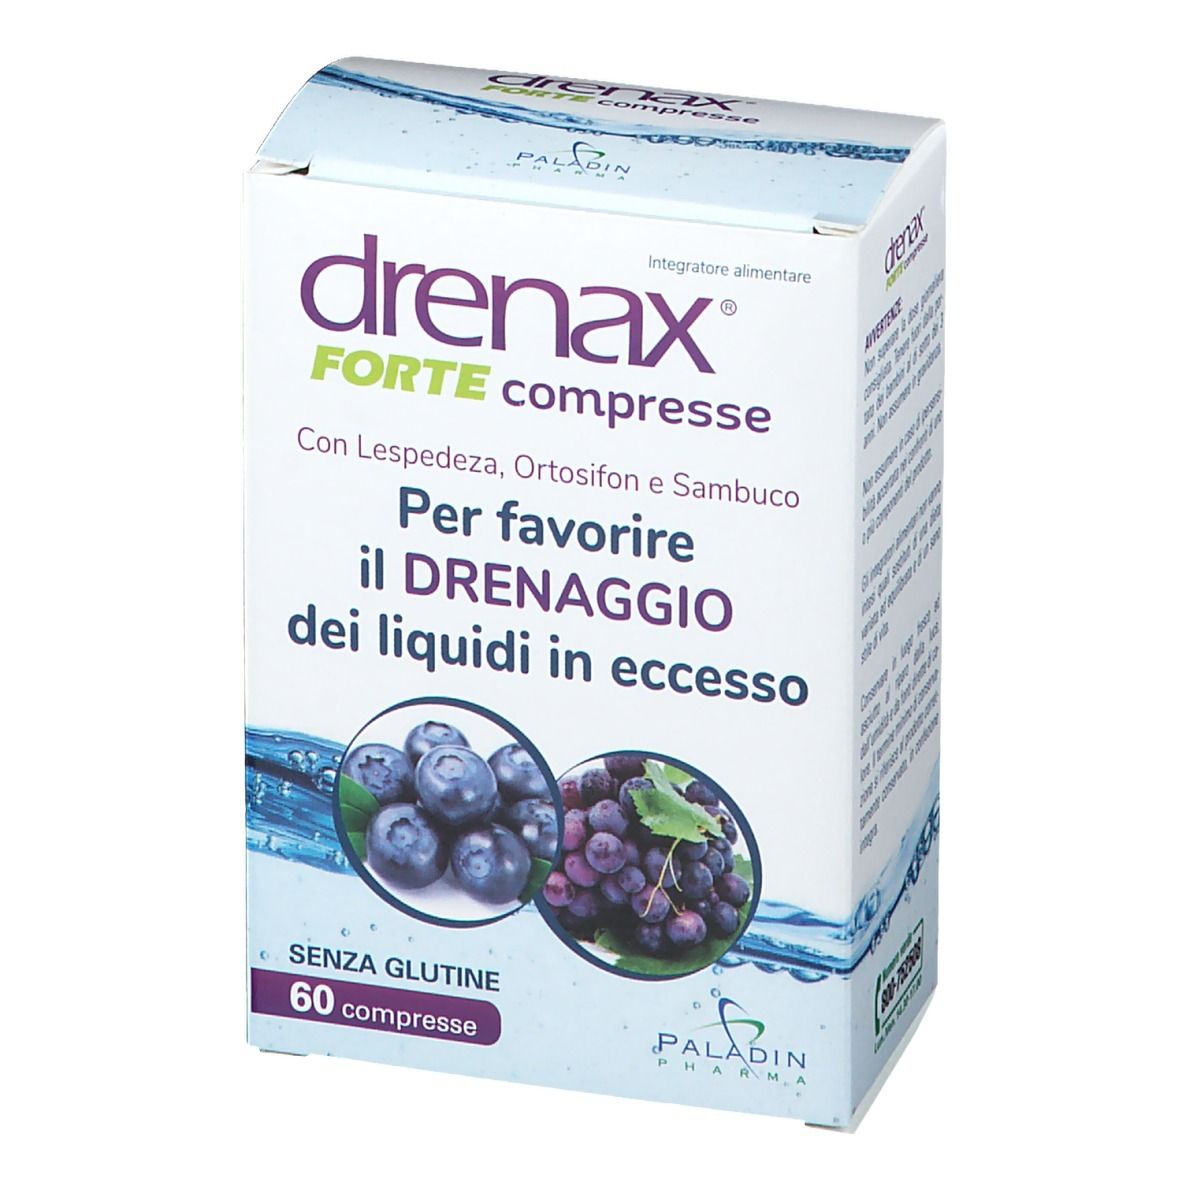 Drenax® Forte Compresse